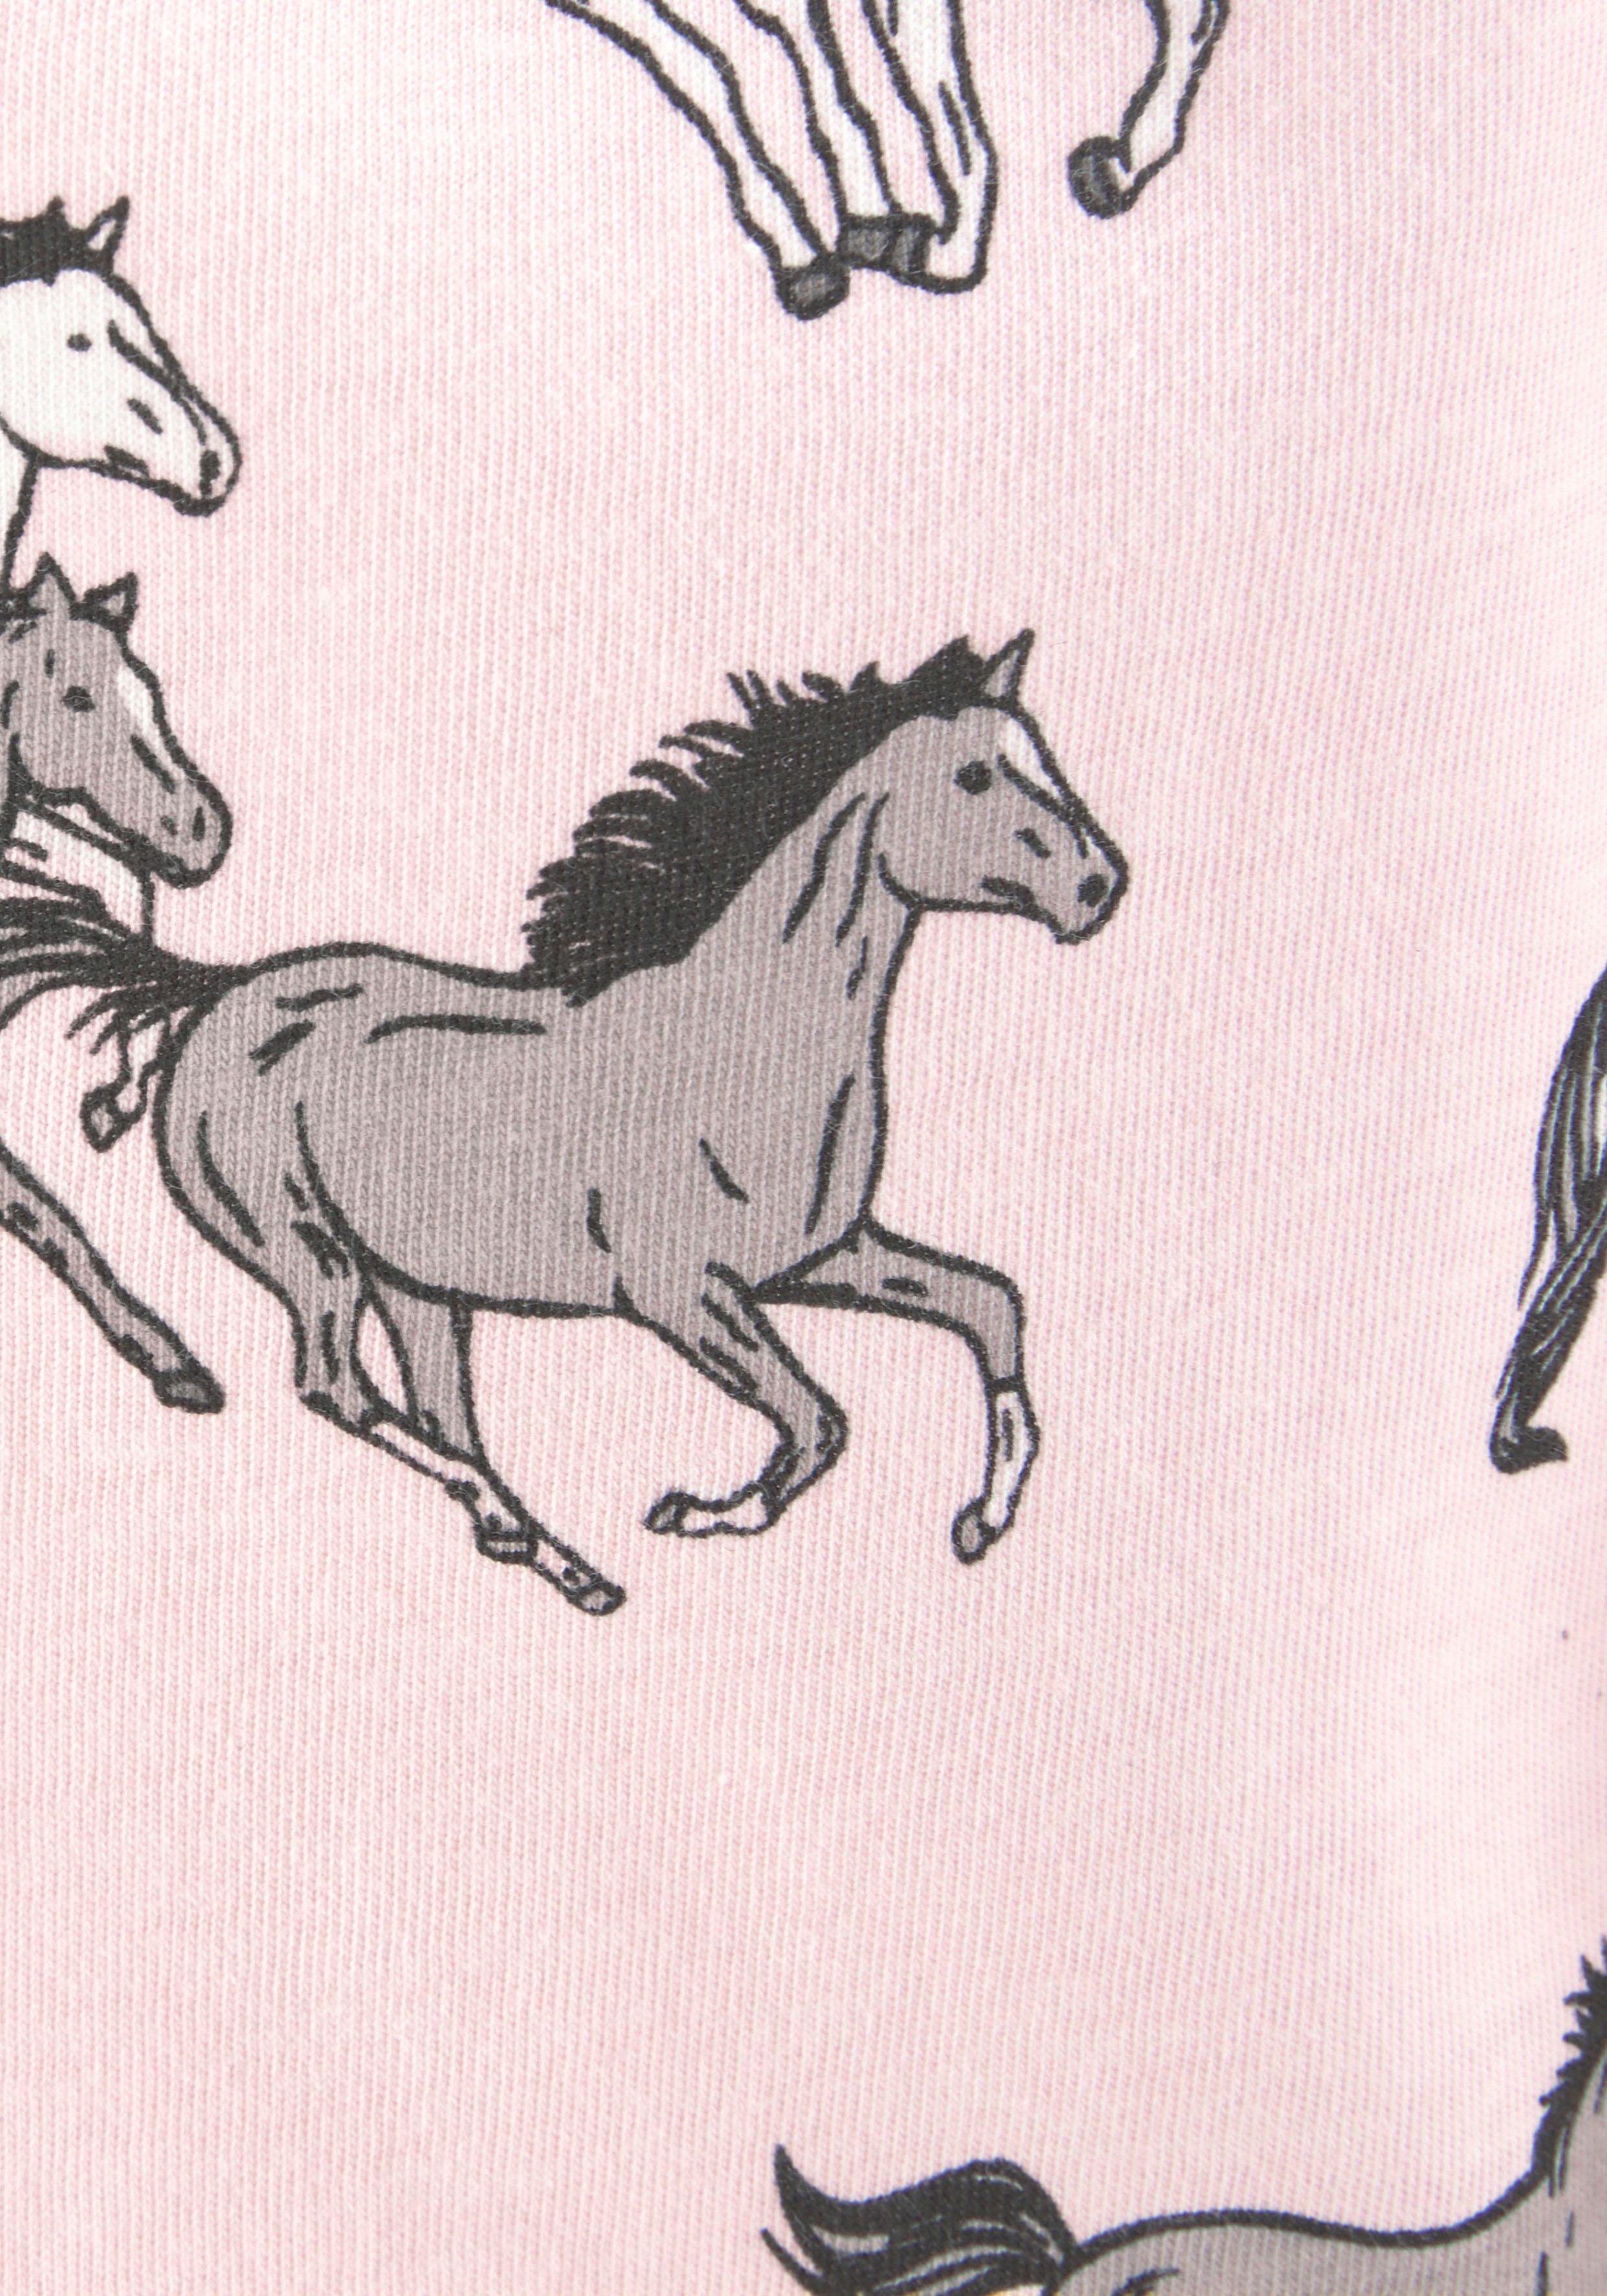 langer Stück) Form 1 fleur (2 Pyjama Print in petite Pferde mit tlg.,